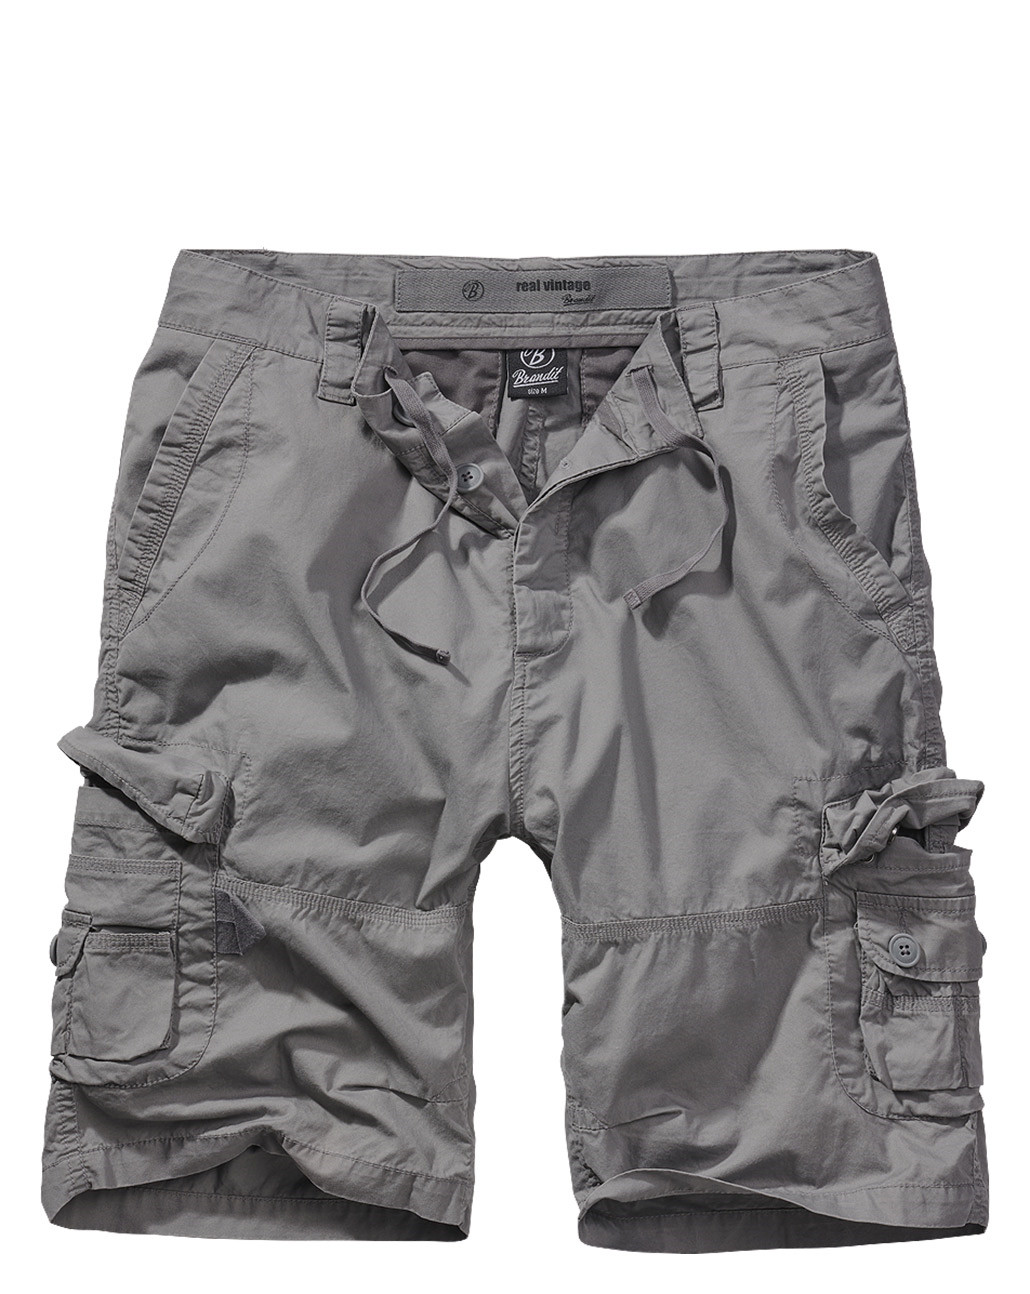 Brandit Ty Shorts (Charcoal, 5XL)